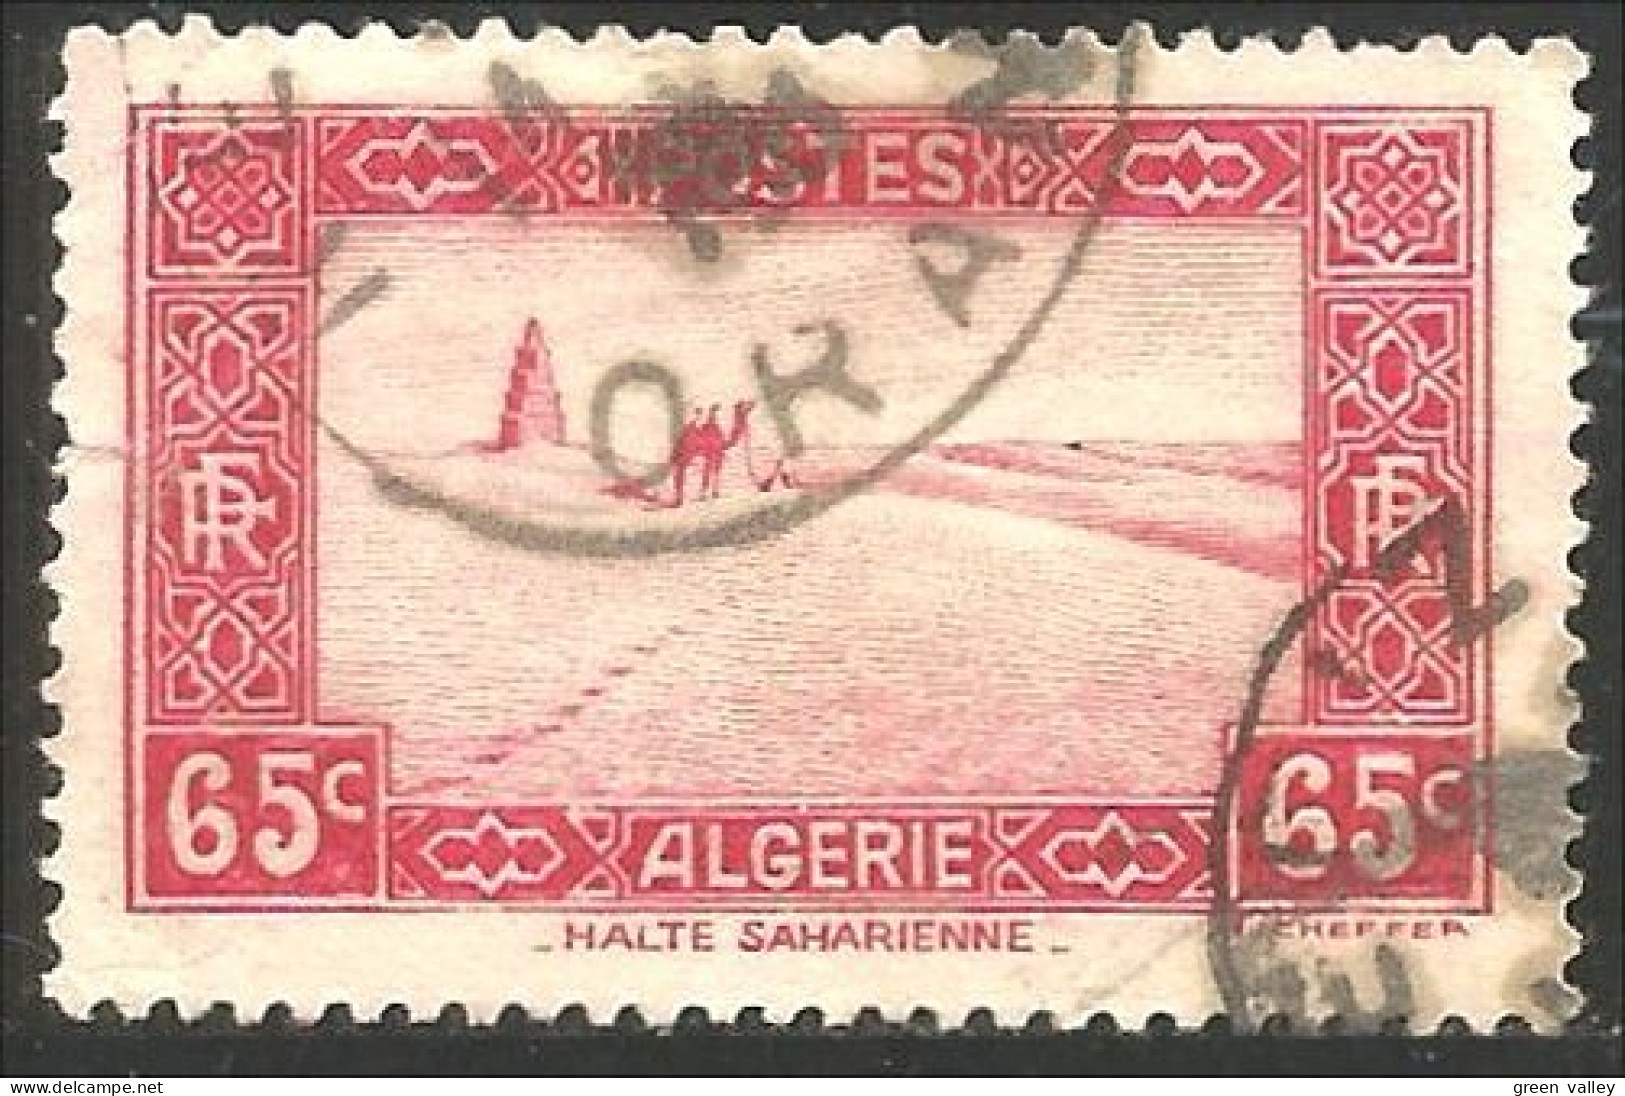 124 Algerie 65c Halte Saharienne Desert Sahara (ALG-181) - Gebraucht